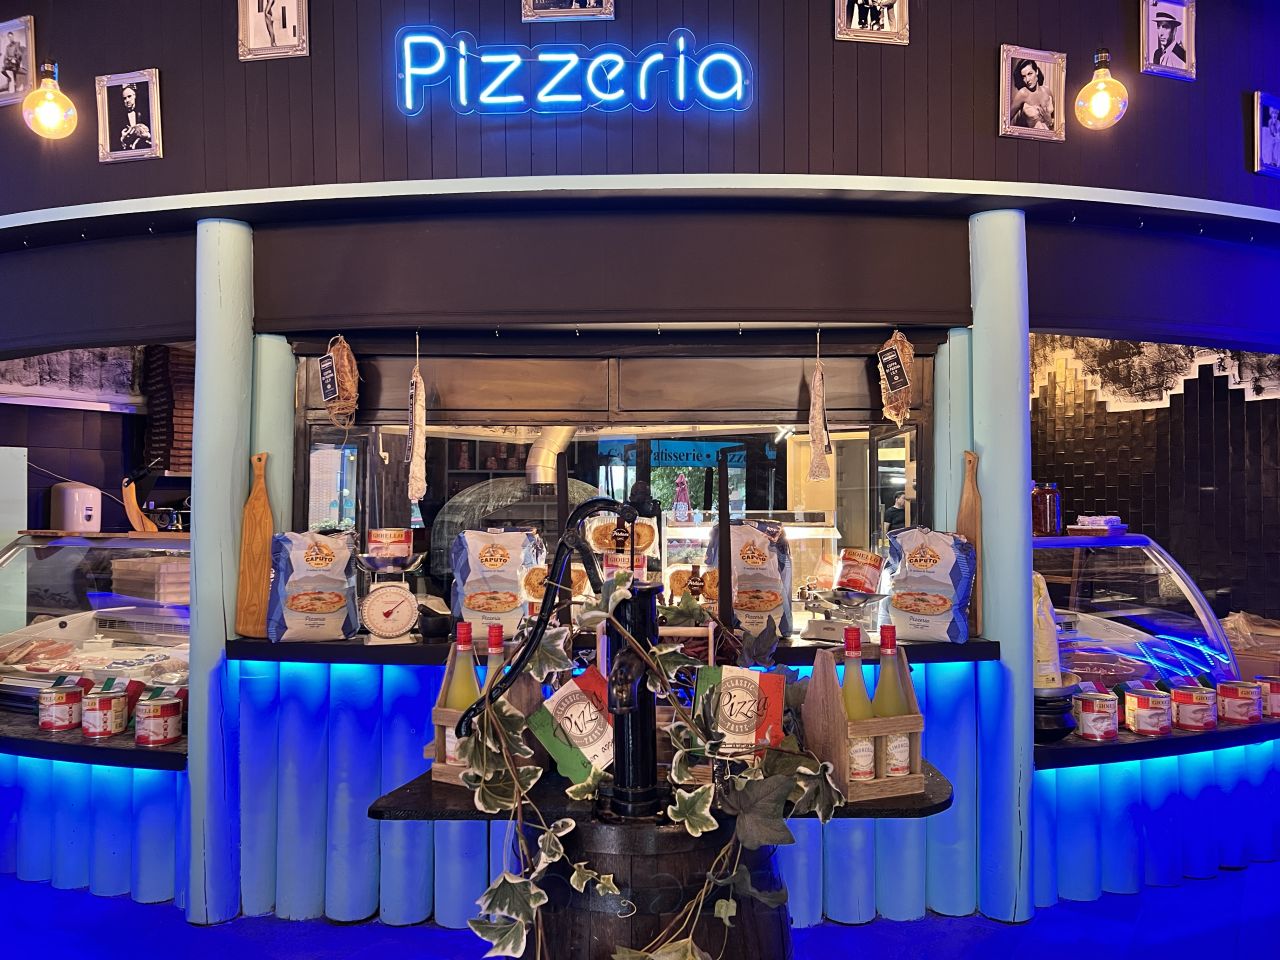 Studio Gusto Pizzeria - Italian (Neapolitan) Pizza Place in Bromley